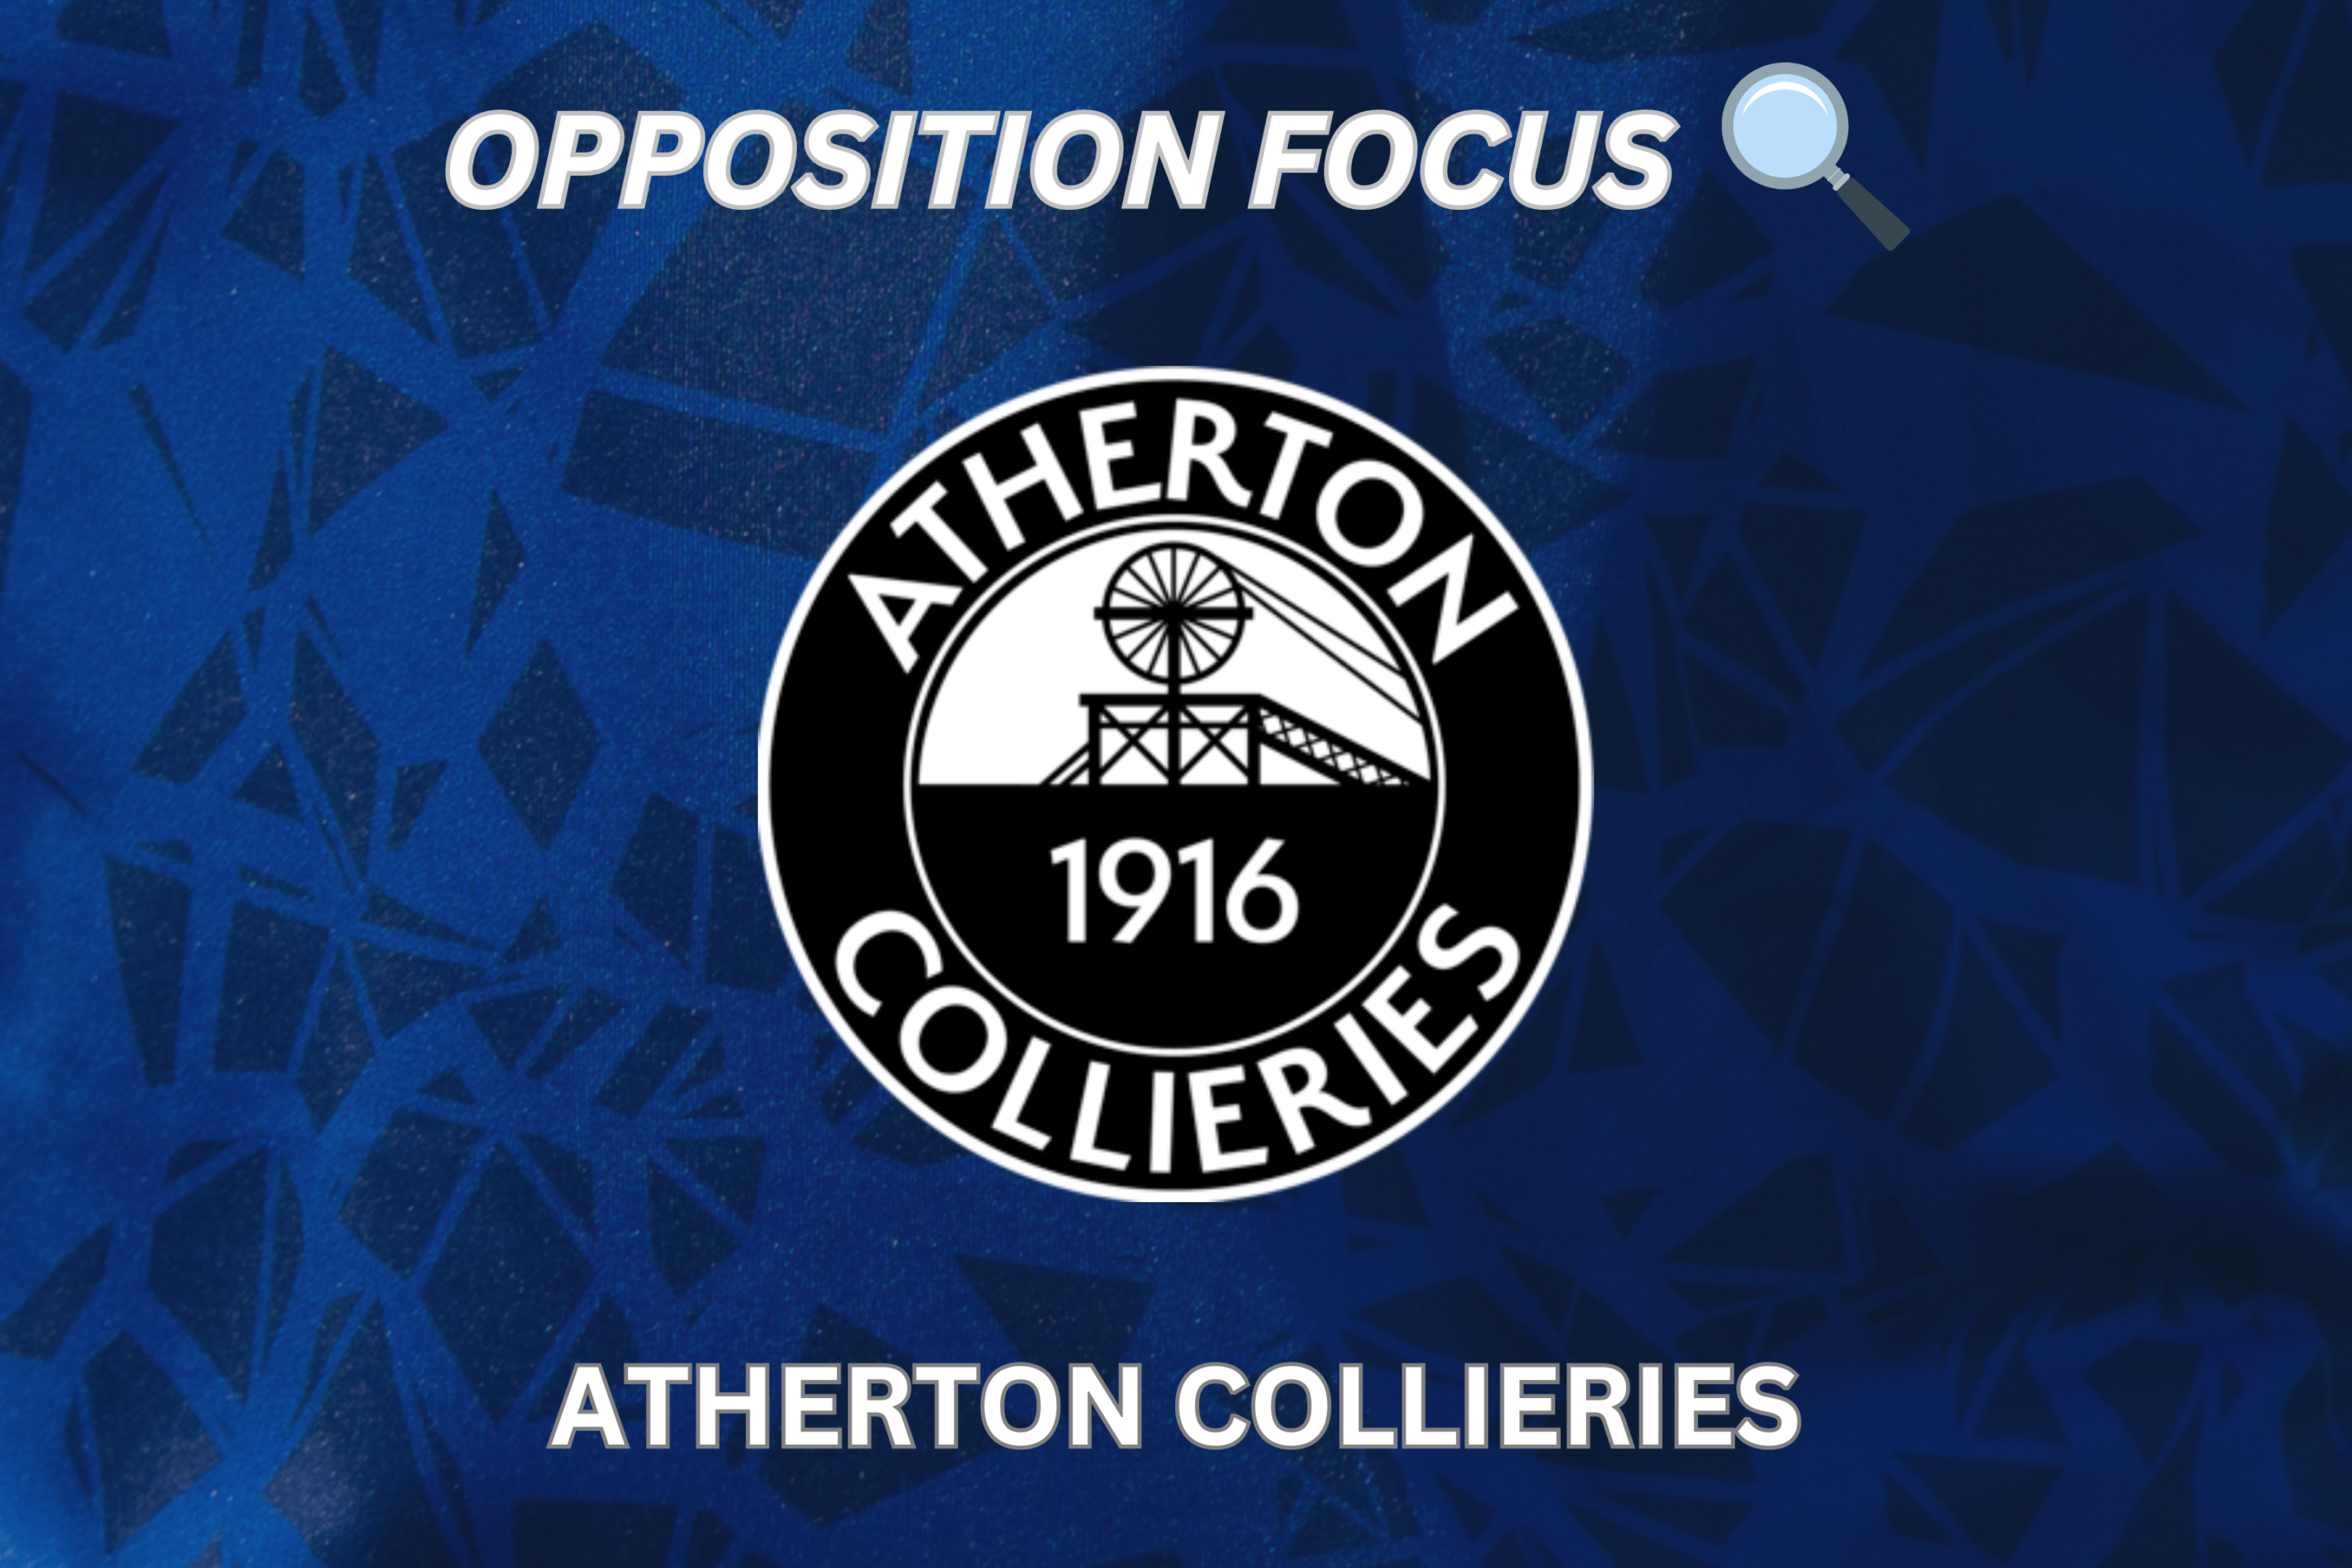 OPPOSITION FOCUS: ATHERTON COLLIERIES